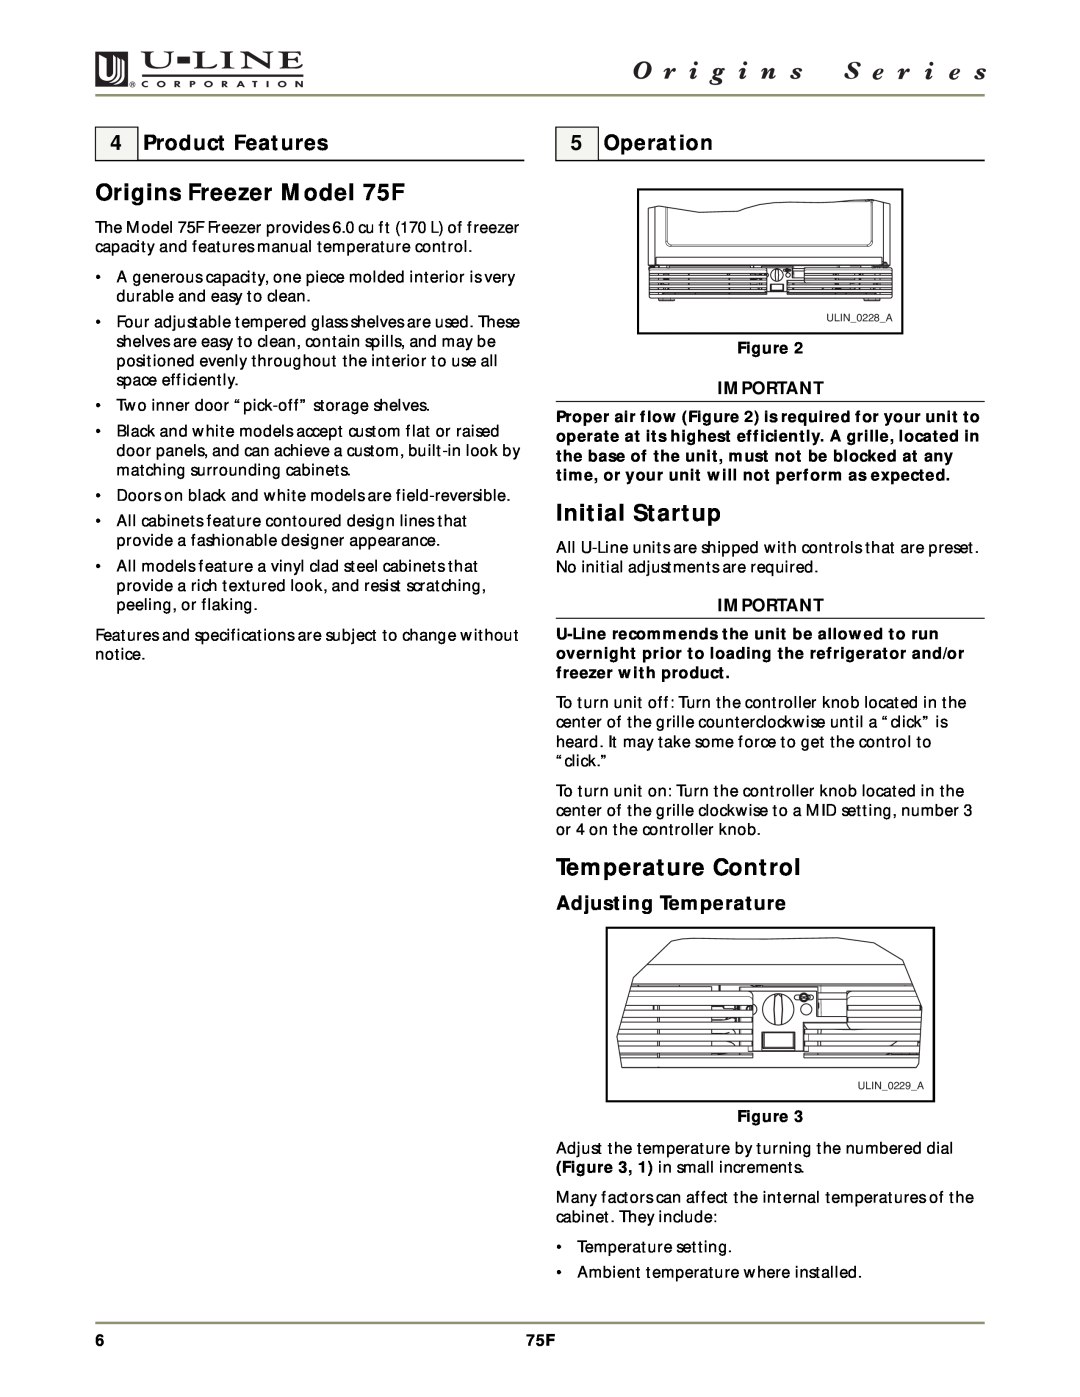 U-Line manual Origins Freezer Model 75F, Initial Startup, Temperature Control, Product Features, Operation 